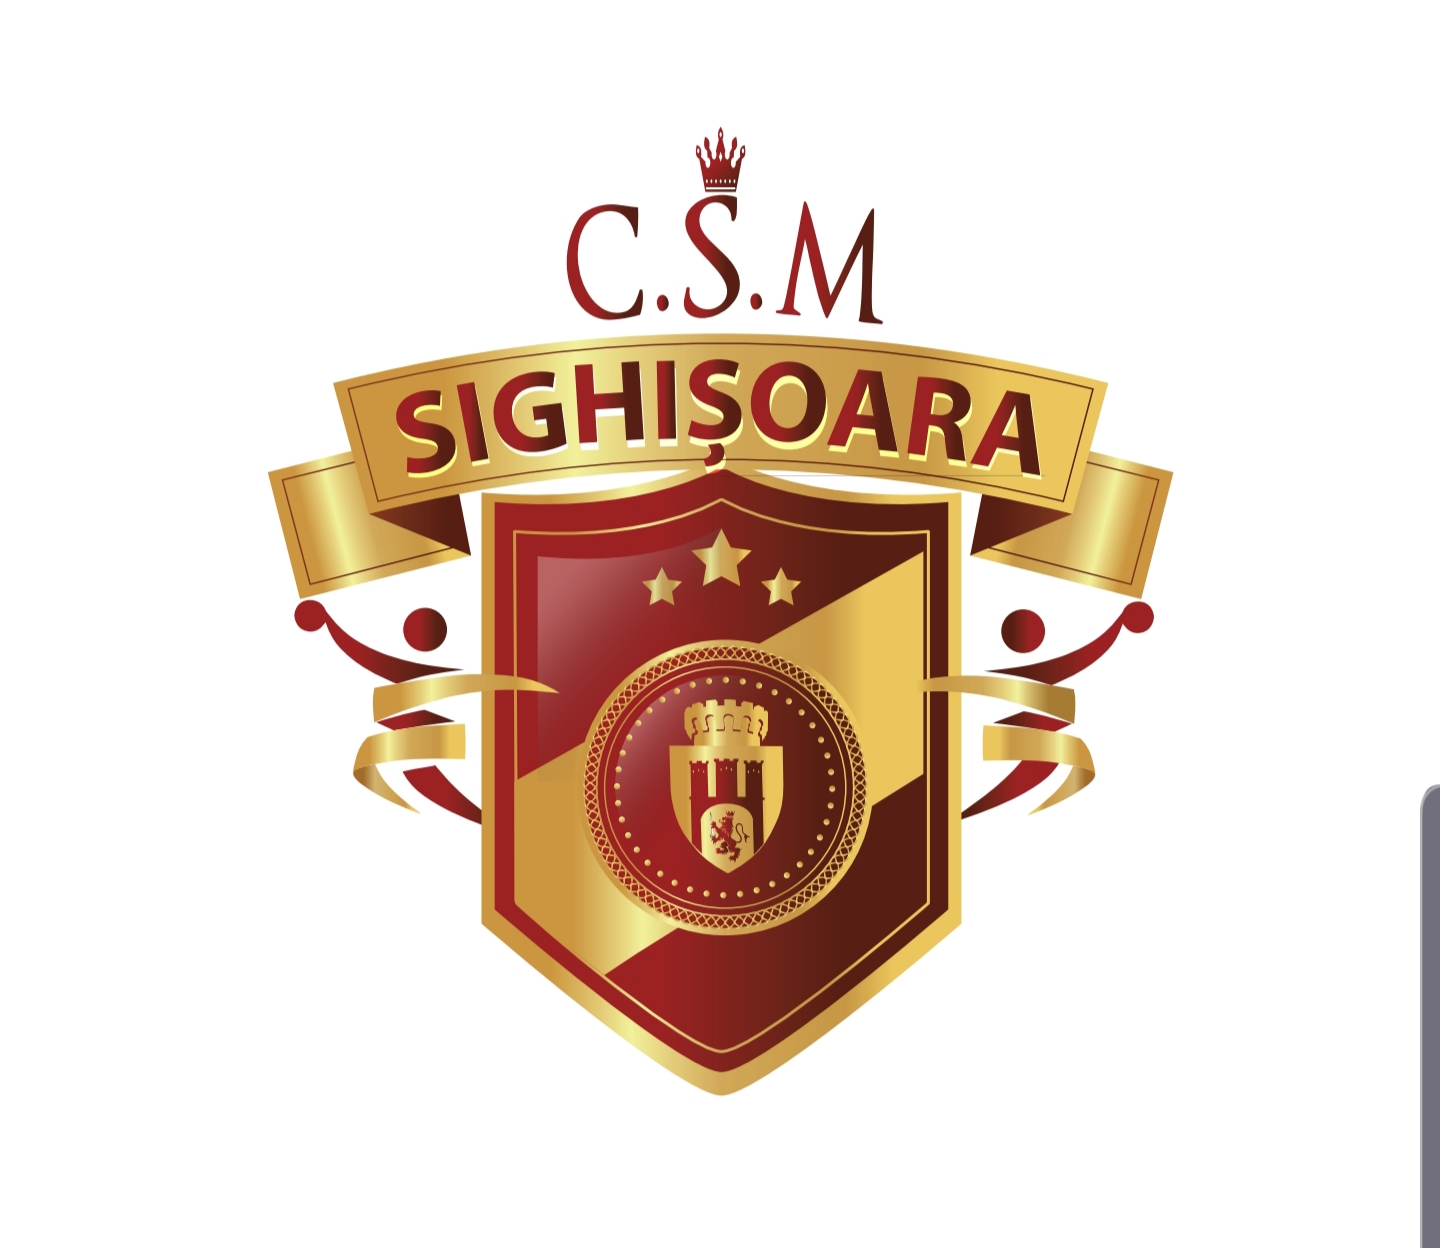 C.S.M. SIGHISOARA